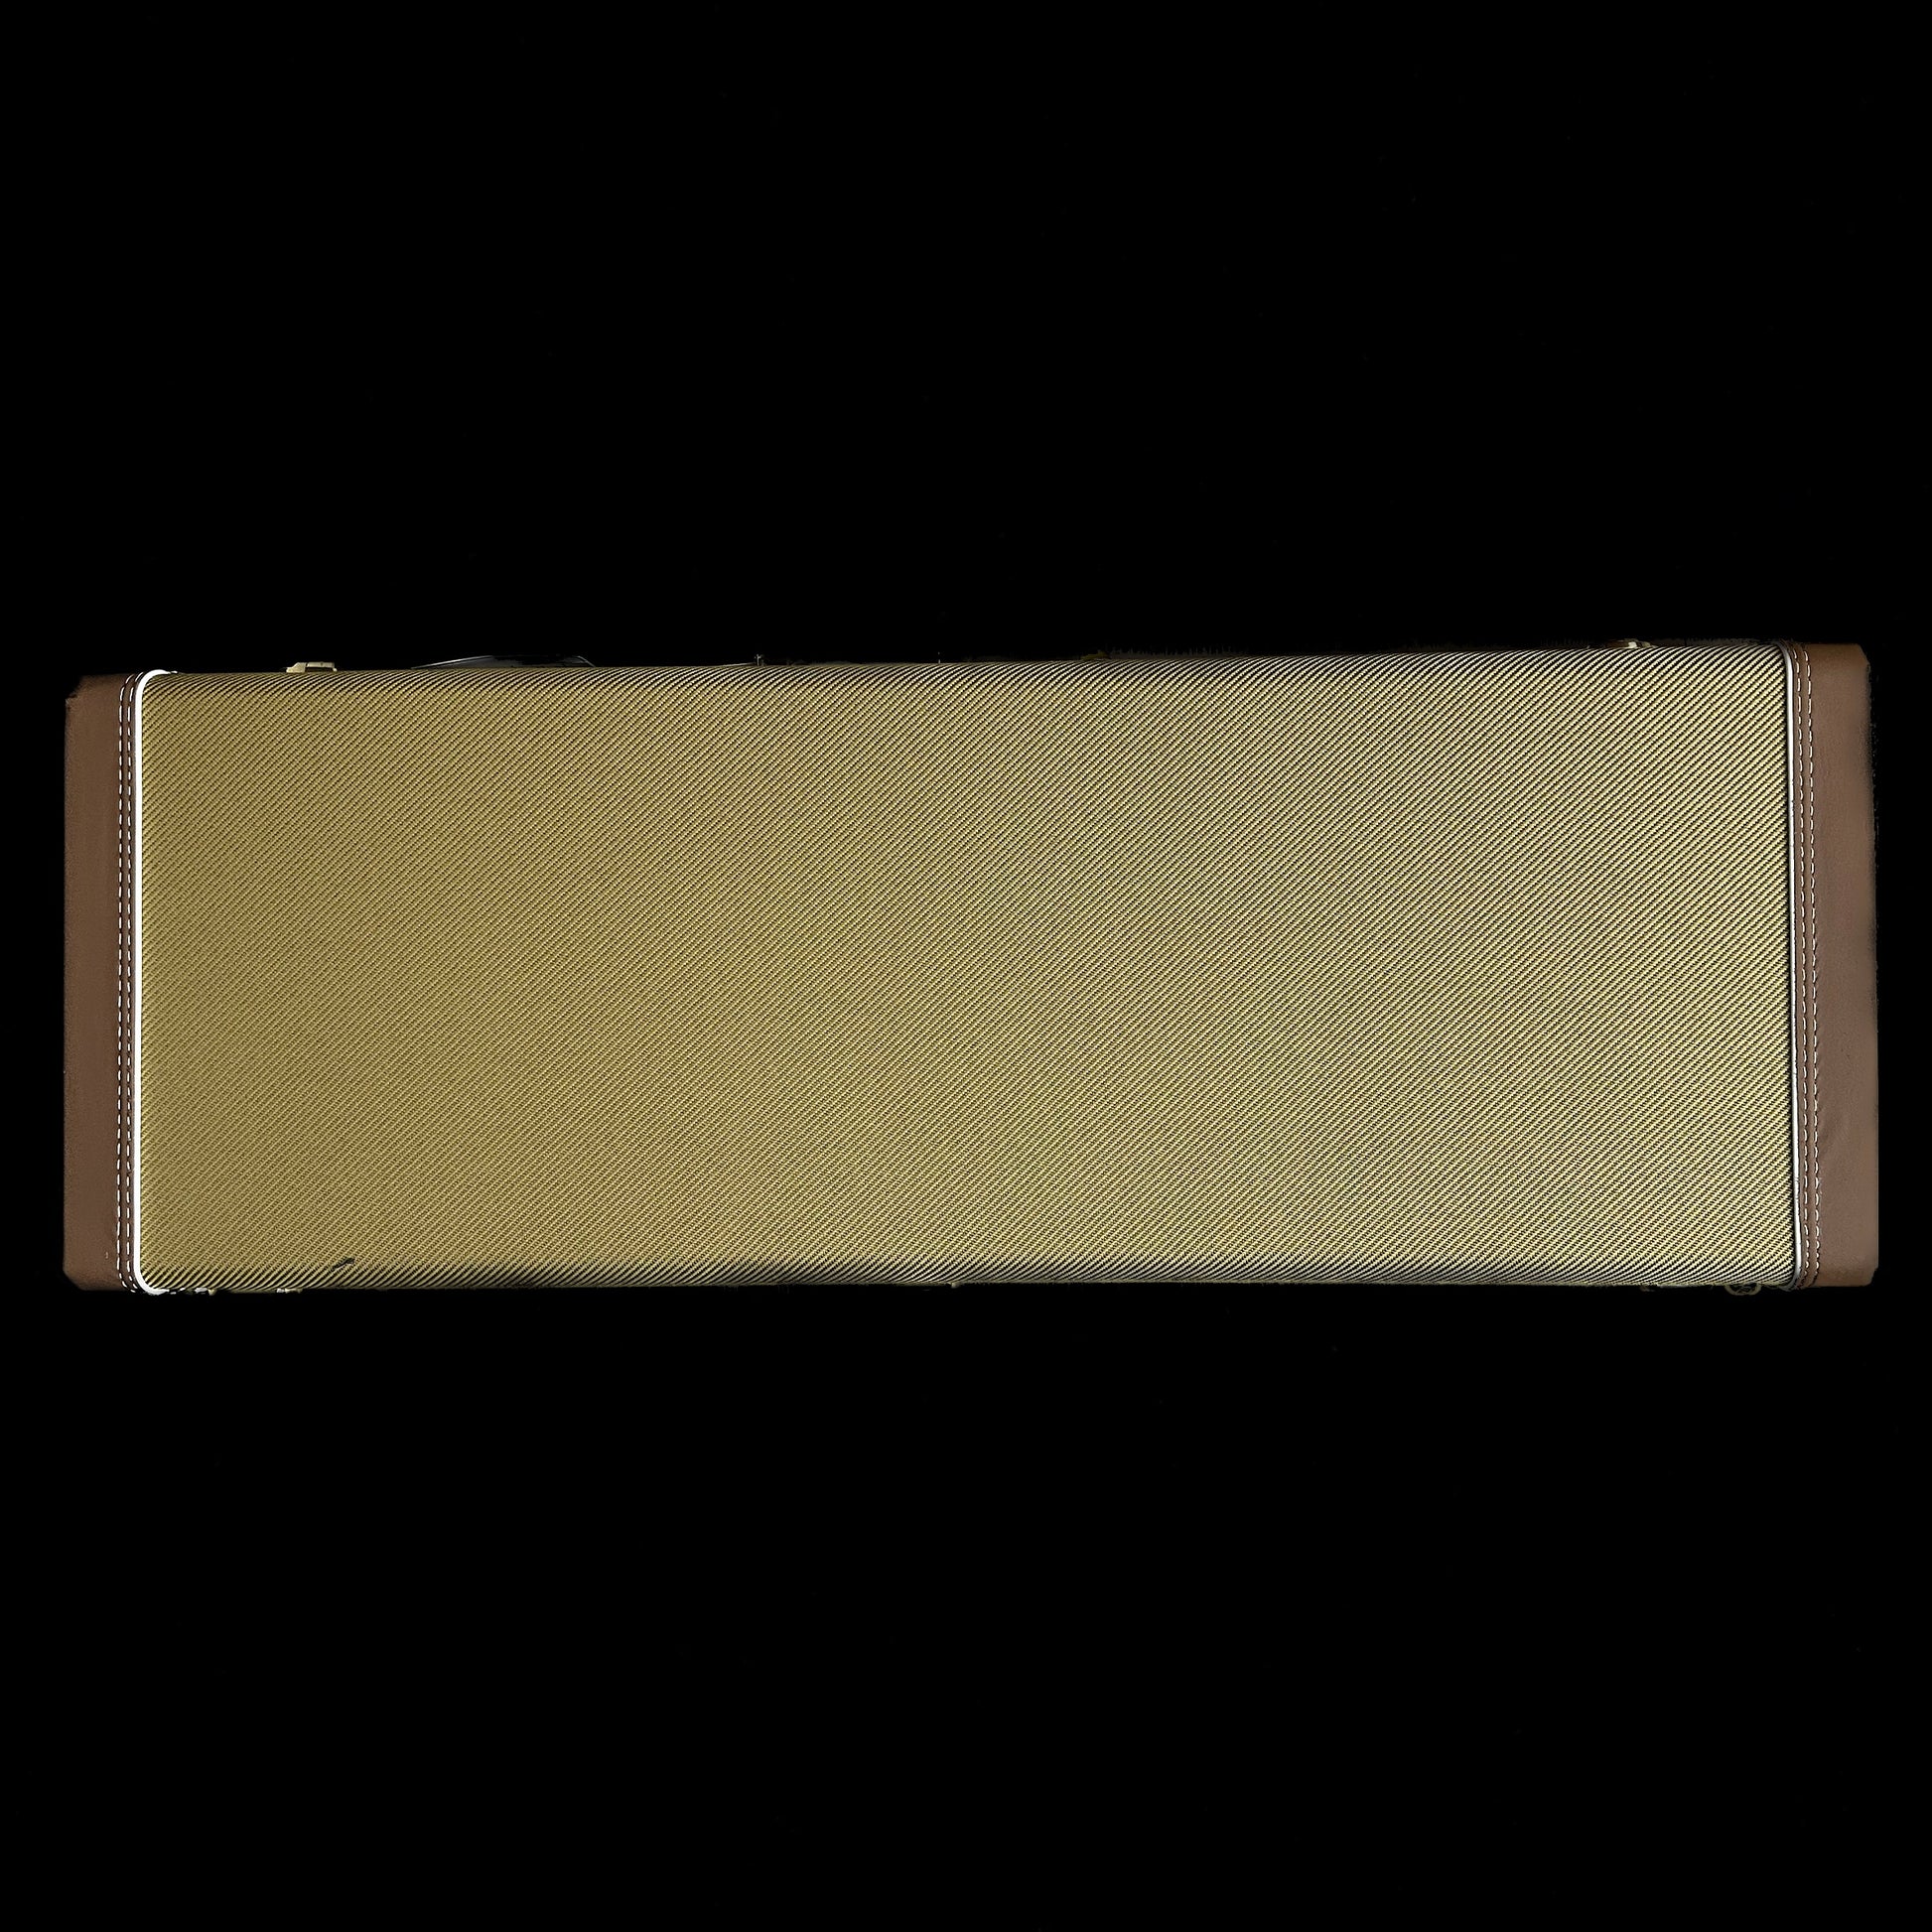 Fender Custom Shop 58 Strat Relic Faded Aged Chocolate 3-color Sunburst case surface.